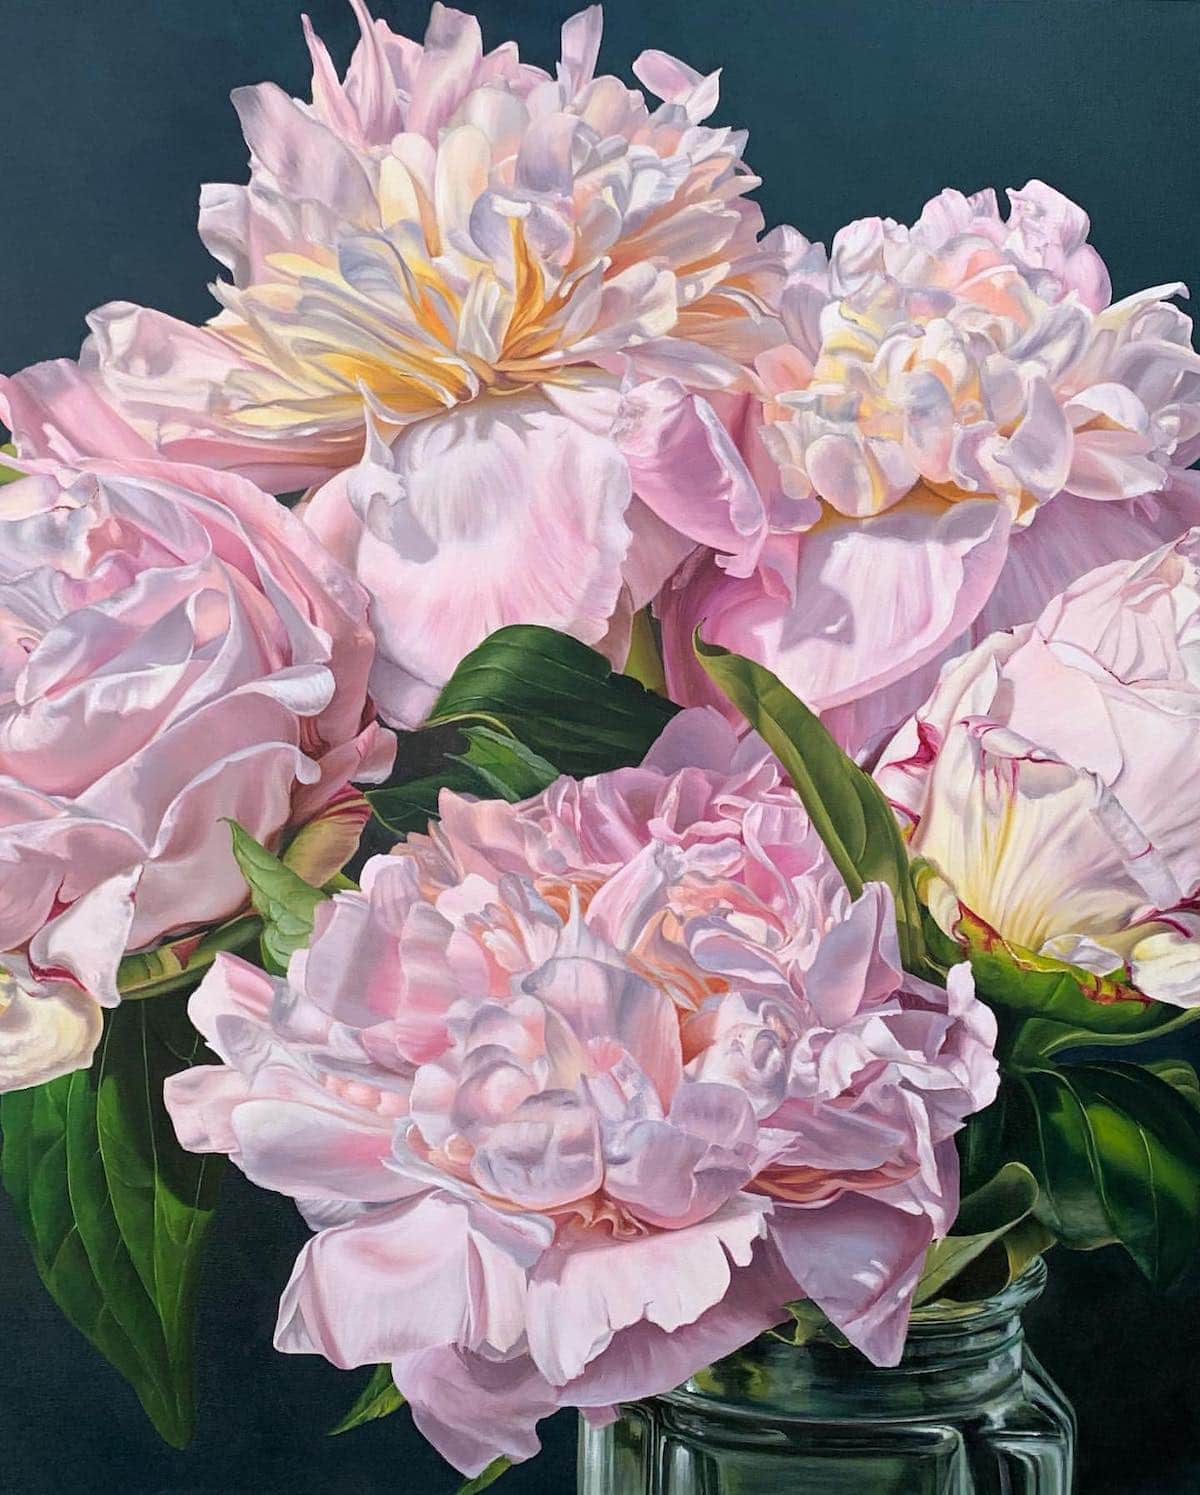 Floral Art Maria Marta Morelli - on Thursd